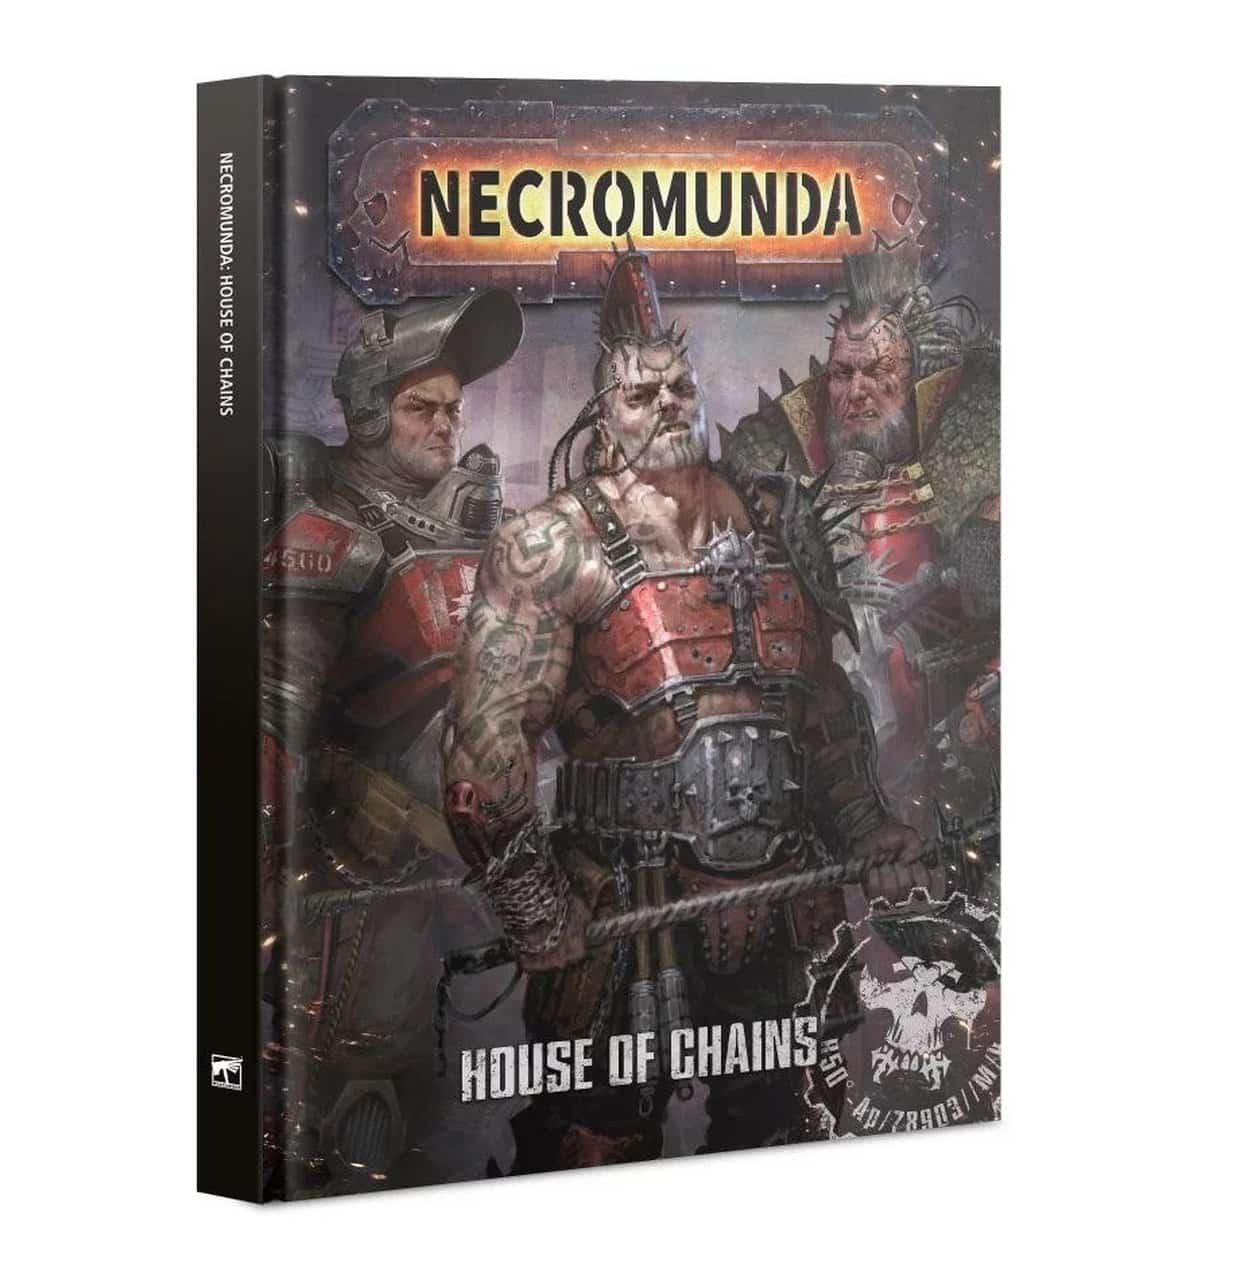 Necromunda - House of Chains